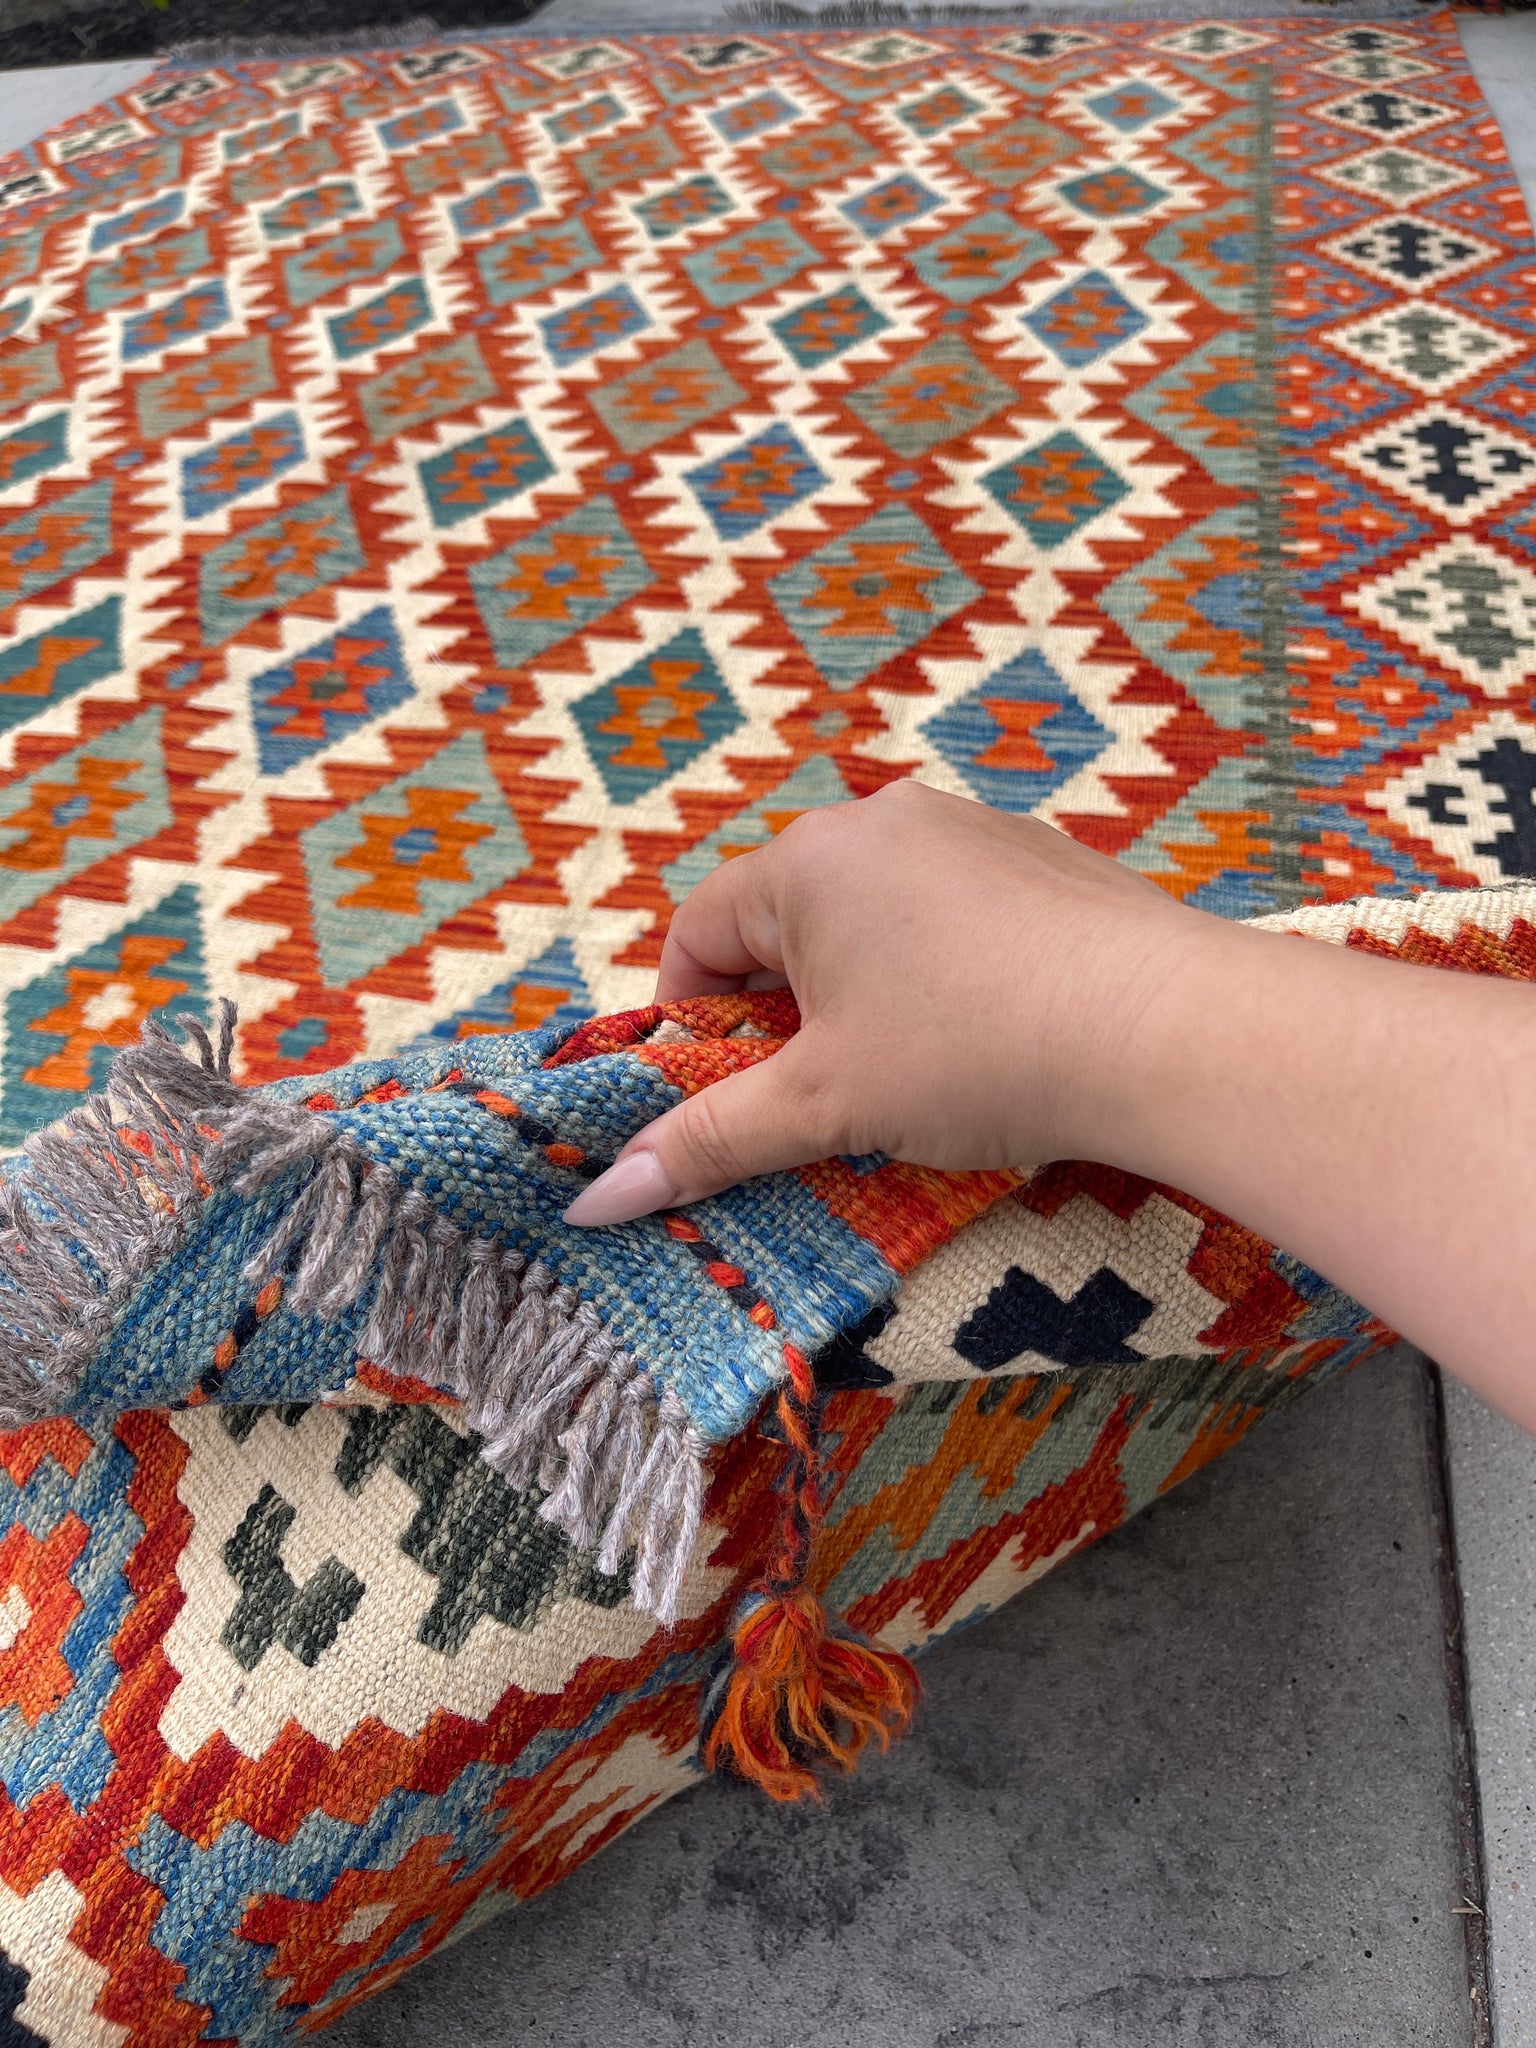 7x10 (215x305) Handmade Afghan Kilim Flatweave Rug | Blue Orange Green Ivory| Boho Tribal Moroccan Outdoor Wool Knotted Woven